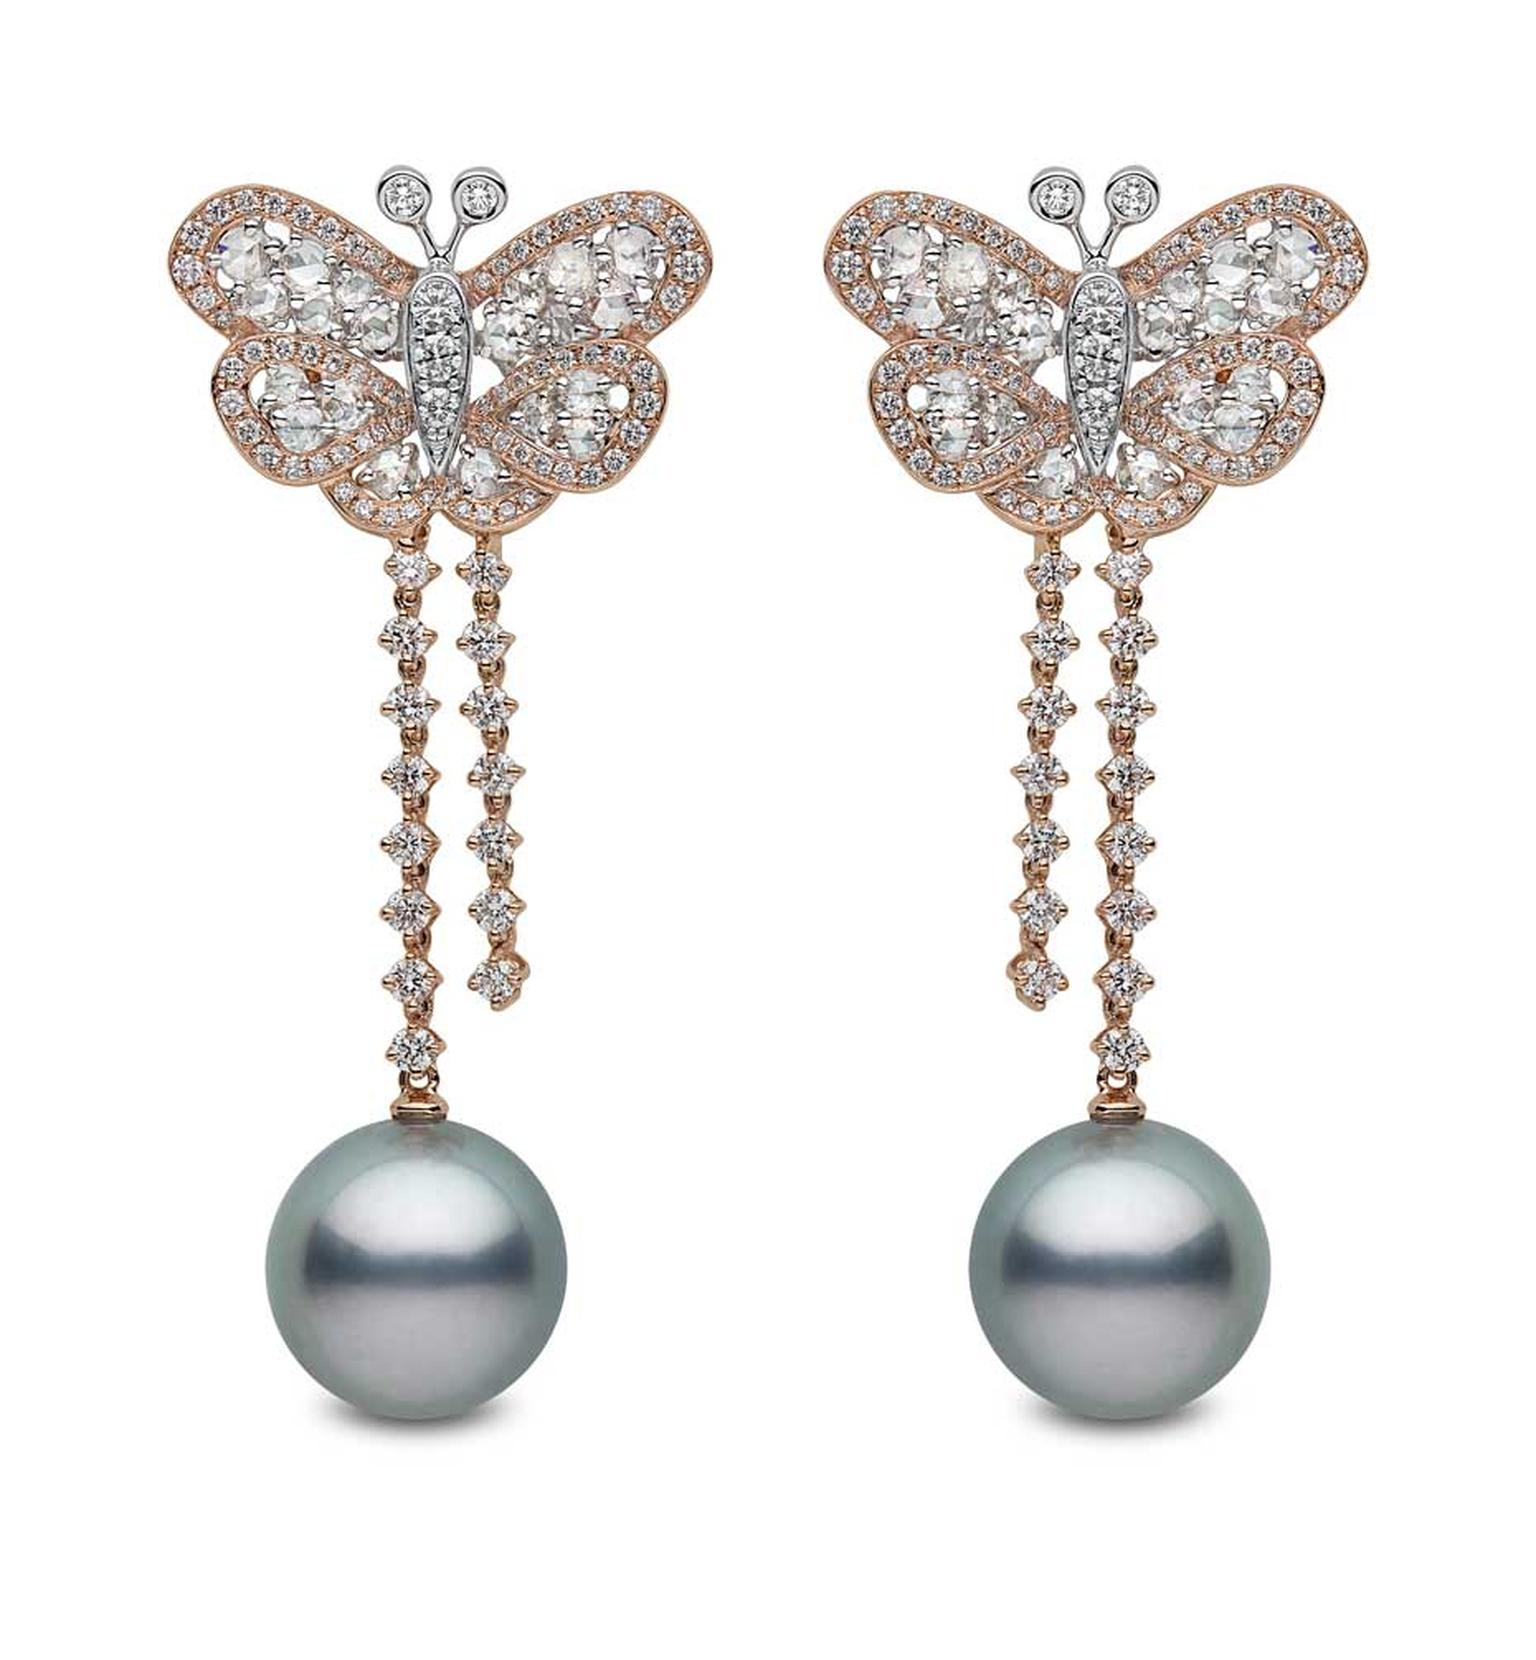 YOKO London pearl earrings in rose gold with diamonds, set with 14-15mm Tahitian pearls.